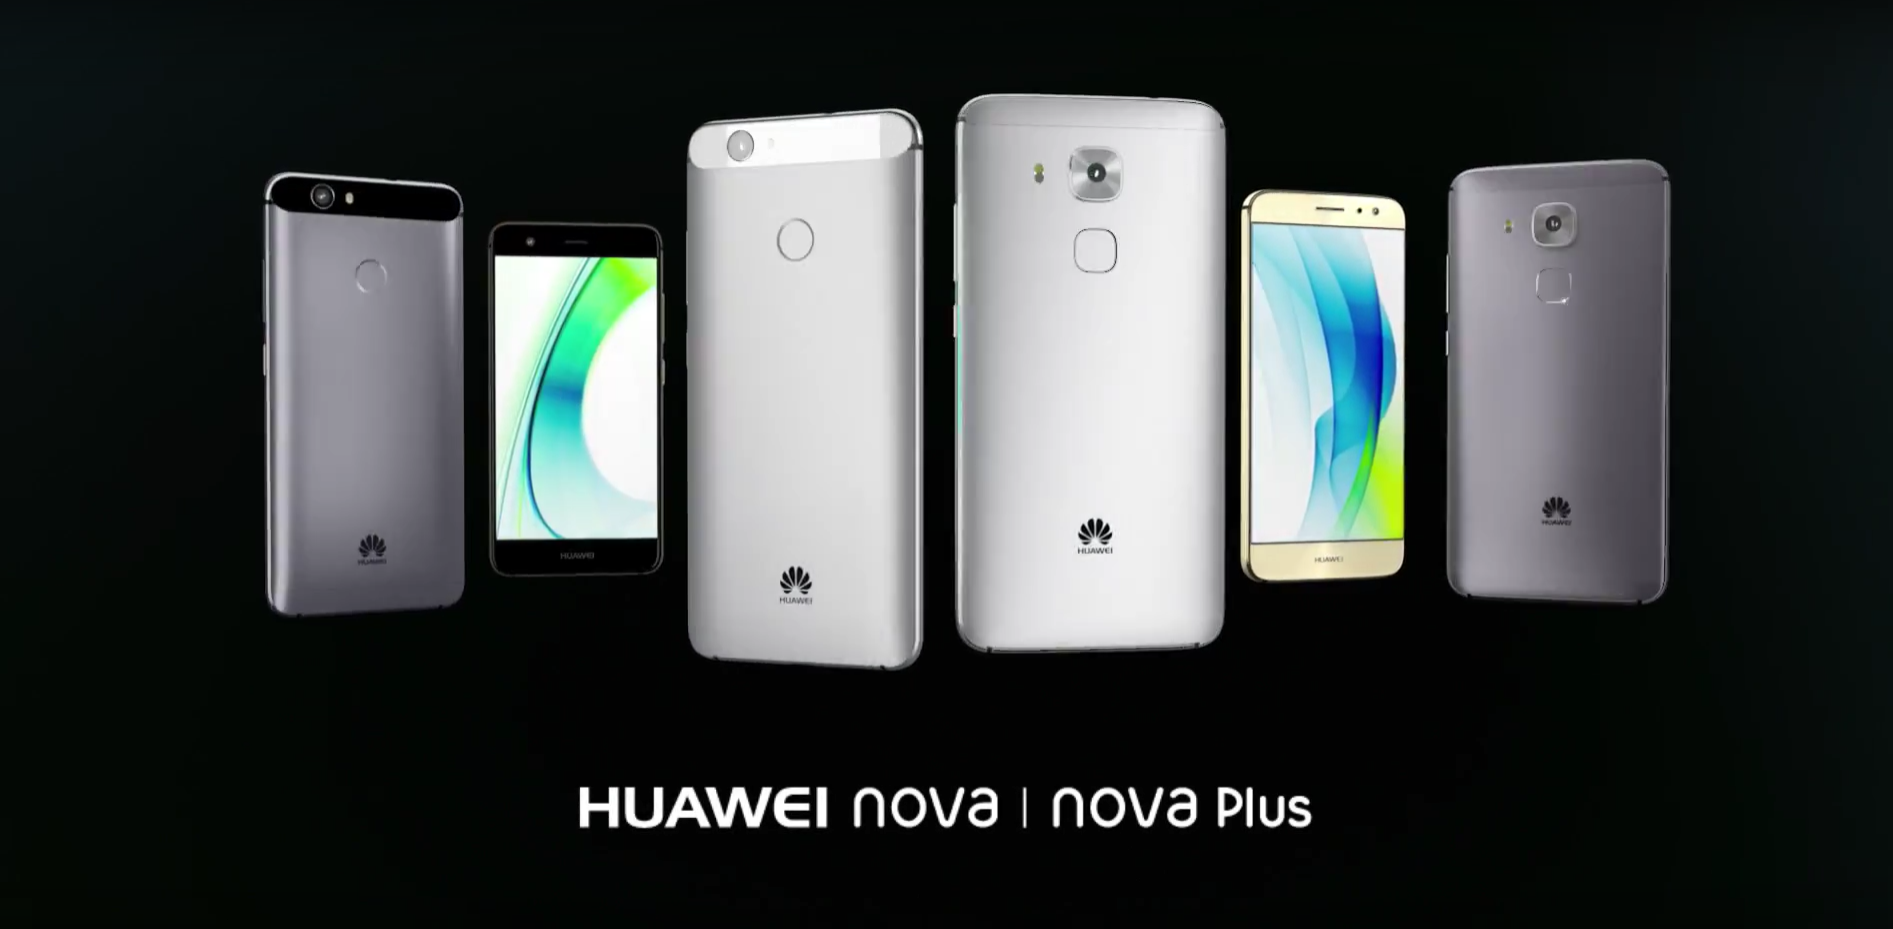 huawei nova plus | Huawei Nova Plus | Huawei เปิดตัว Nova, Nova Plus และ MediaPad M3 ในงาน IFA 2016 ที่ผ่านมา